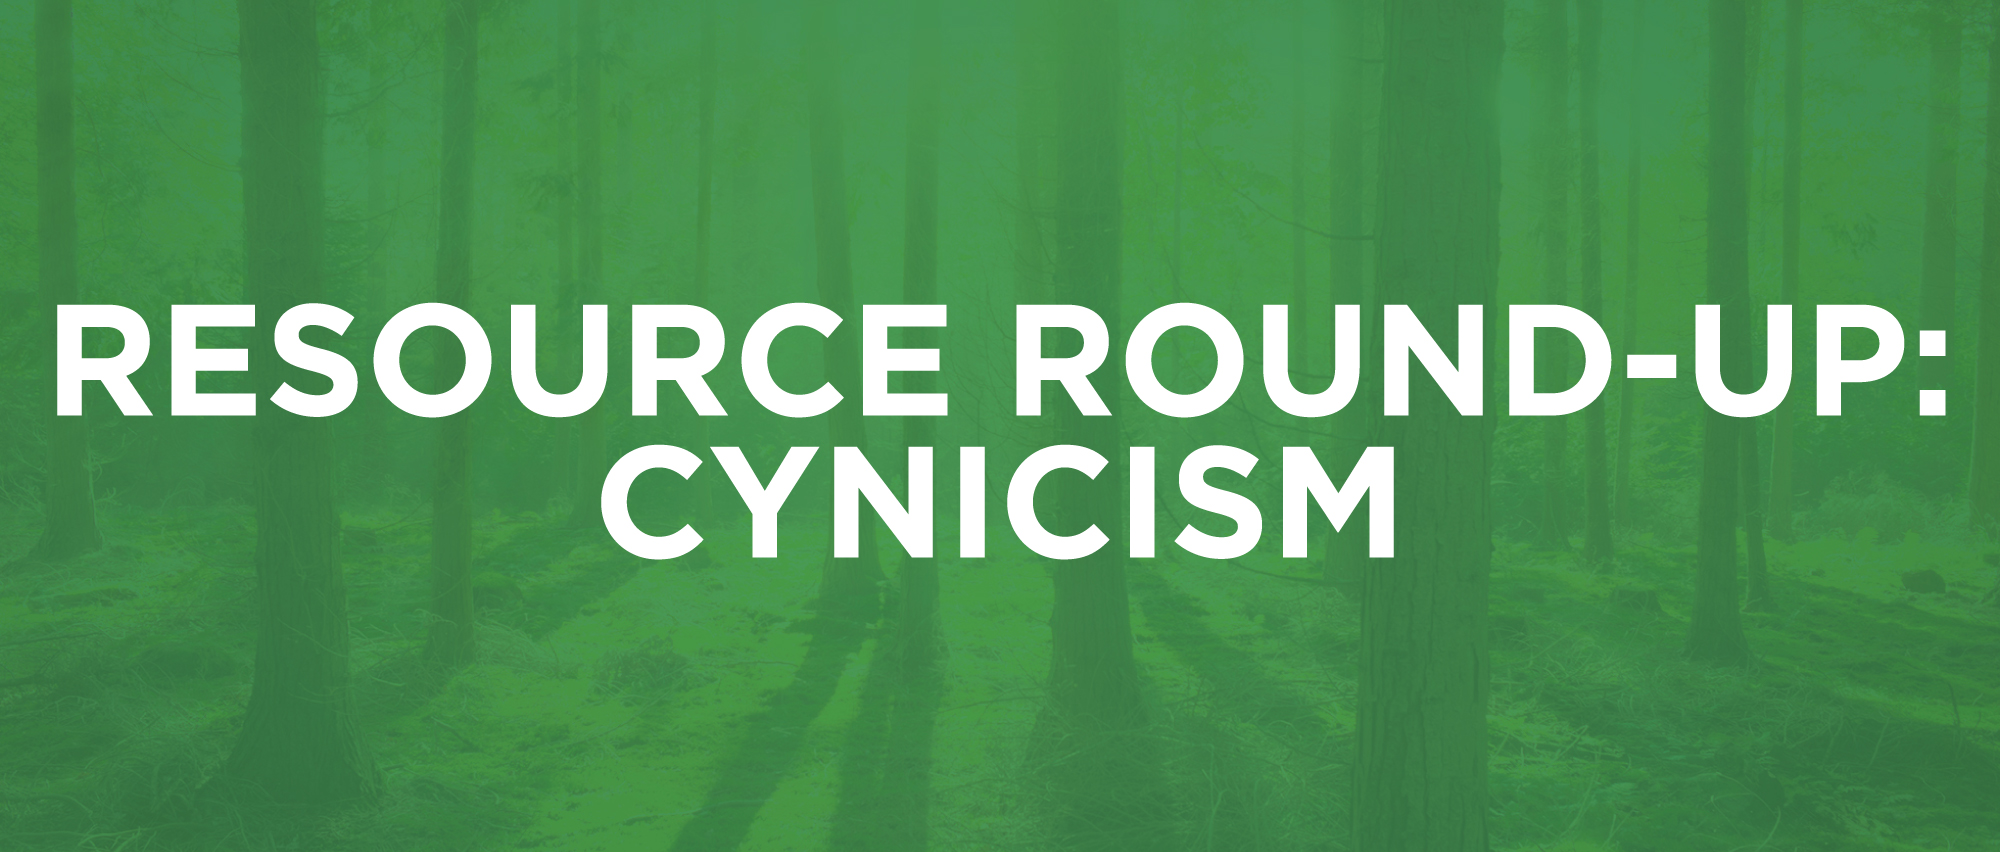 ResourceRoundup-4-Cynicism.jpg